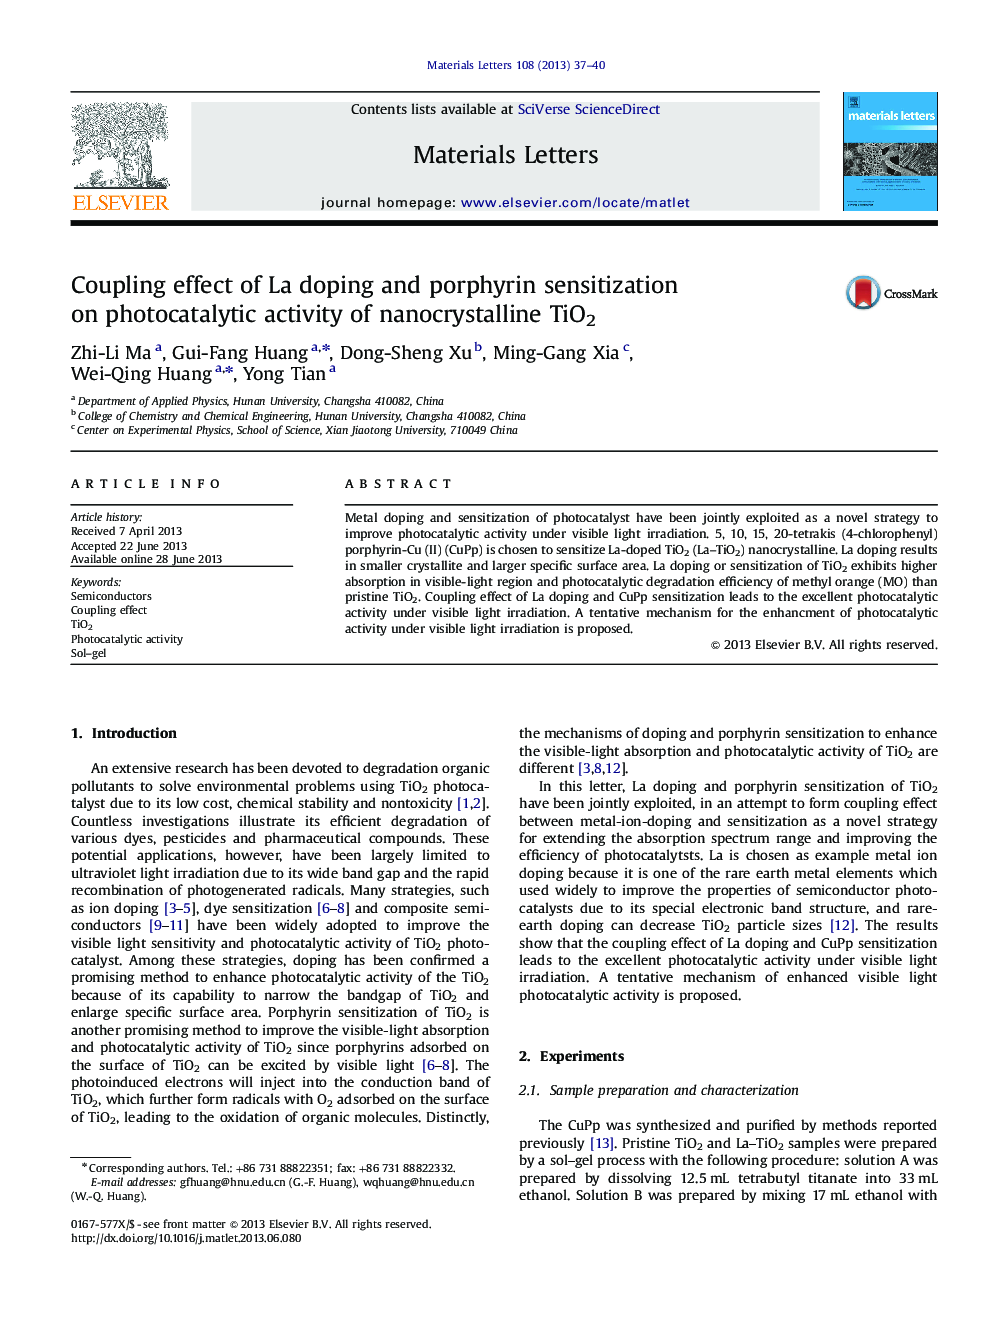 Coupling effect of La doping and porphyrin sensitization on photocatalytic activity of nanocrystalline TiO2